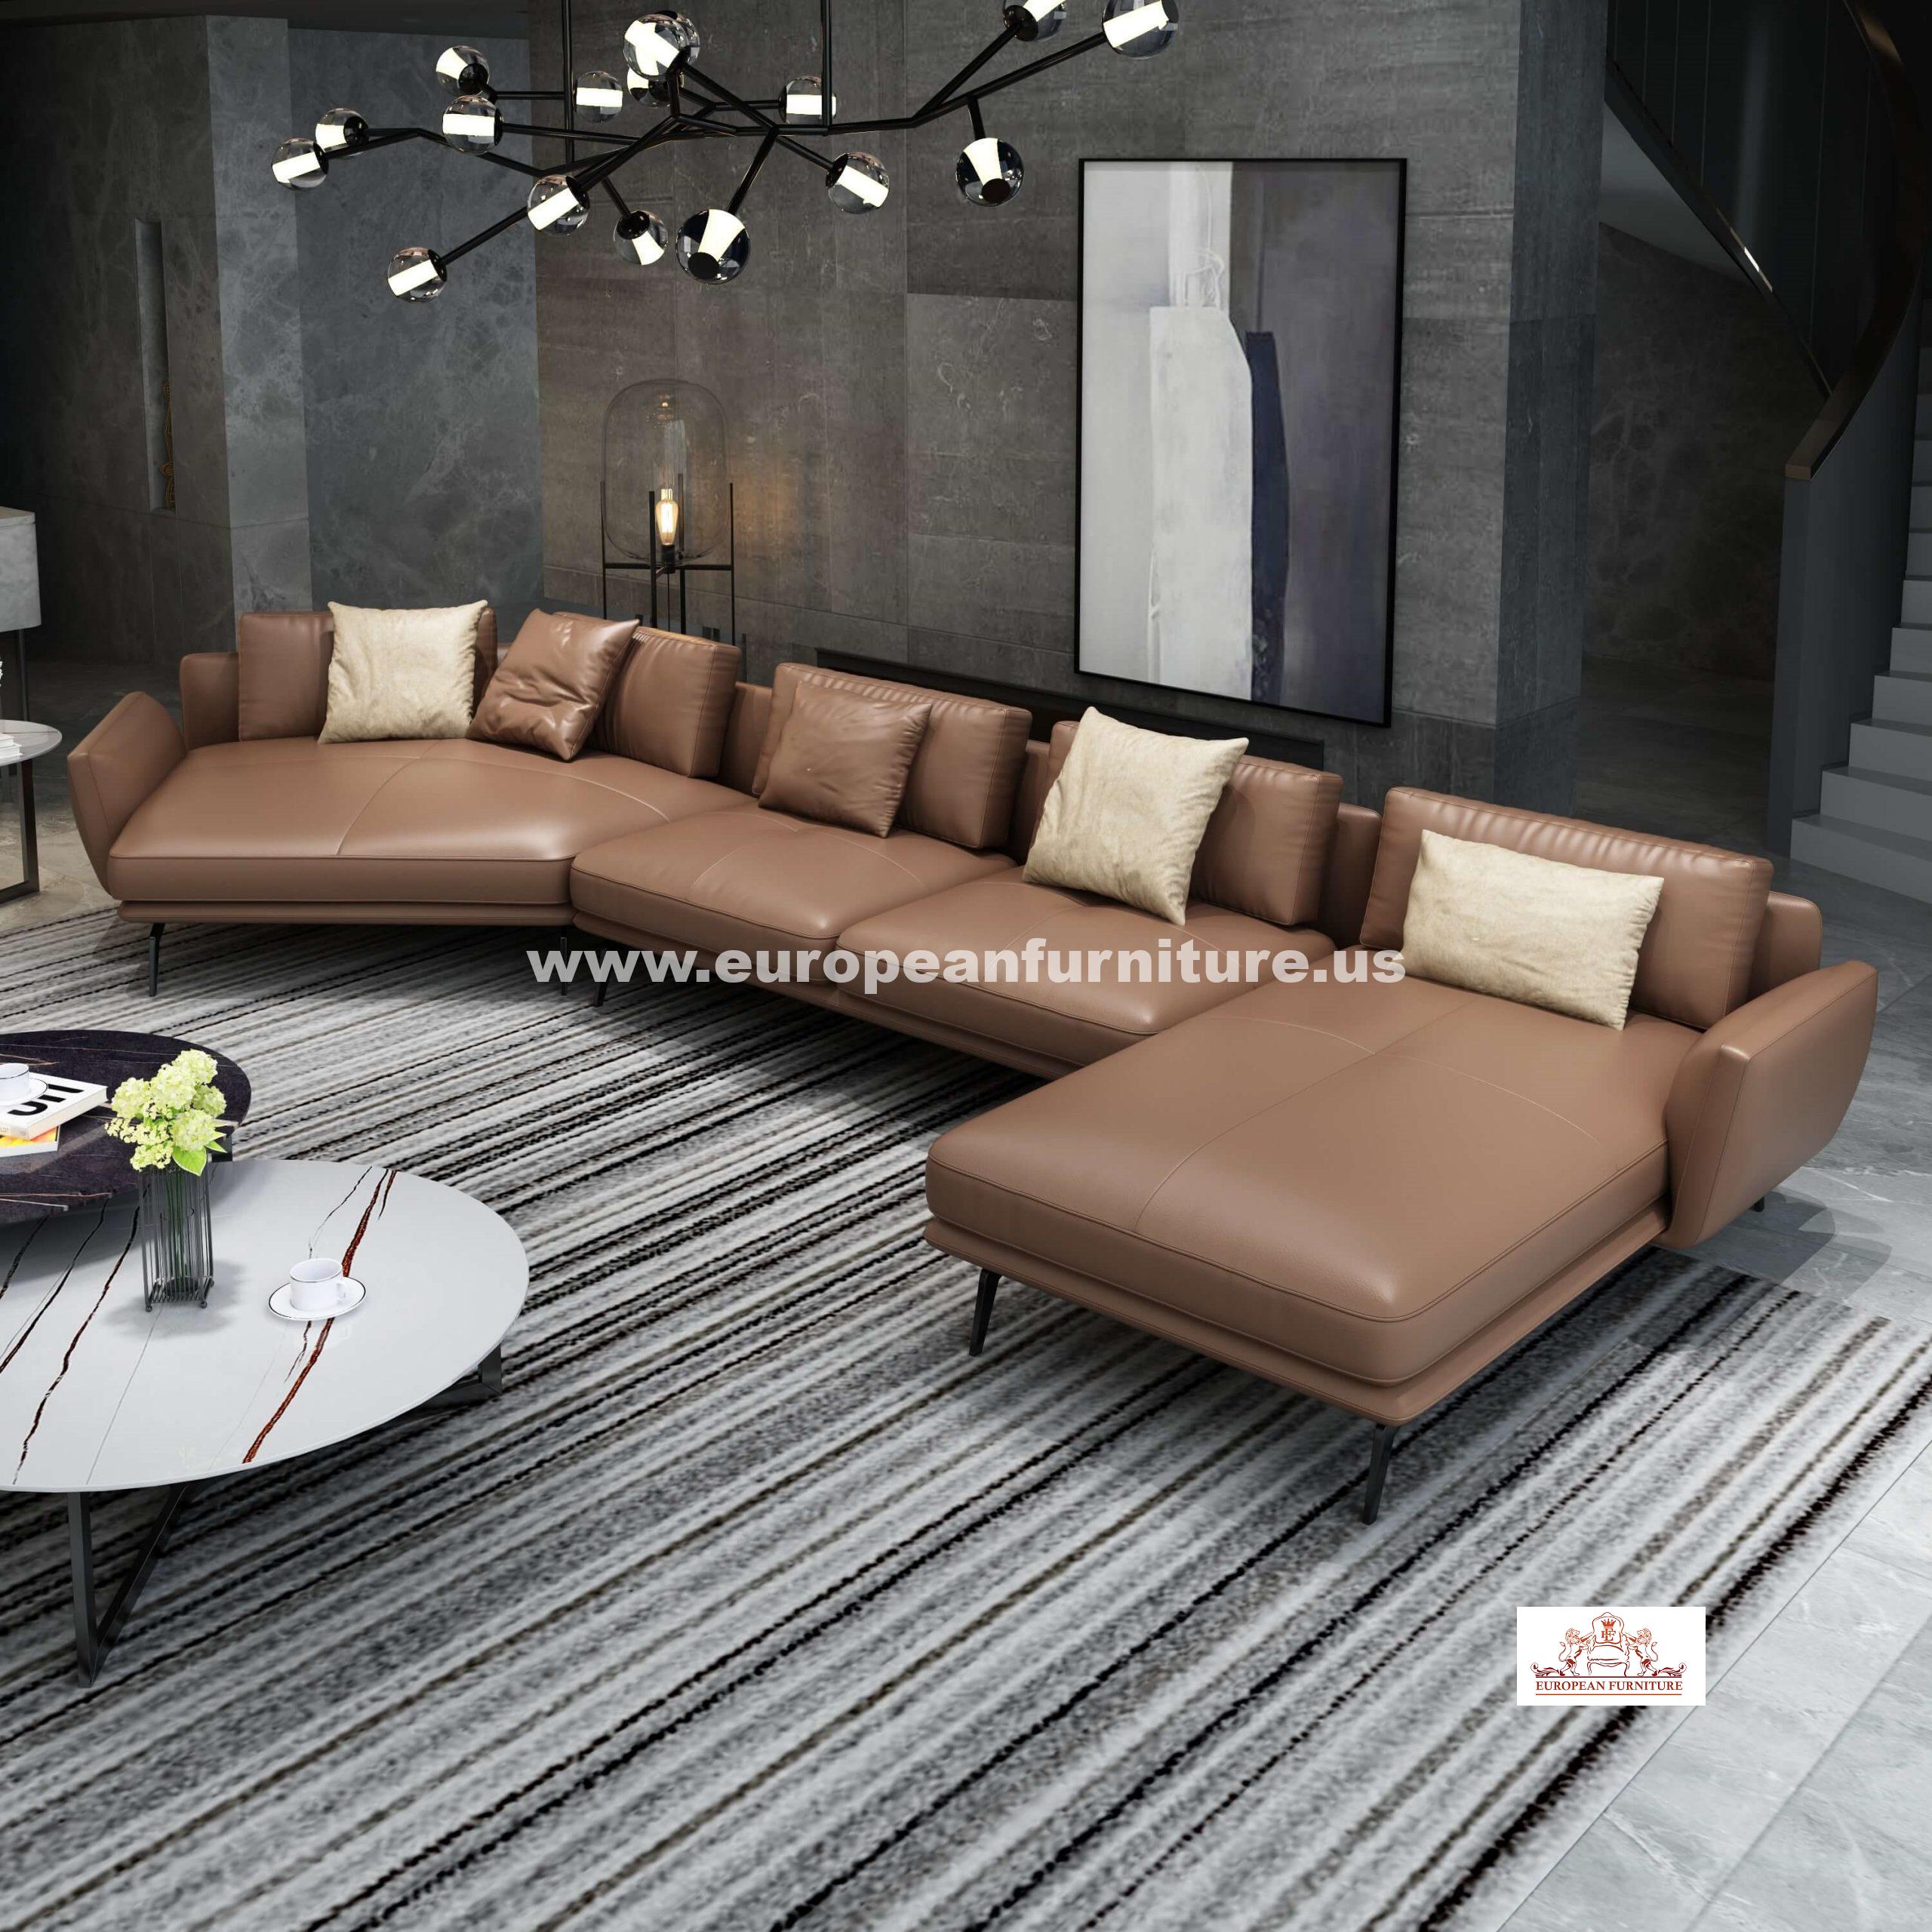 European Furniture - Santiago Italian Russet Brown Leather RHF Sectional - EF-83540R-3RHF - New Star Living